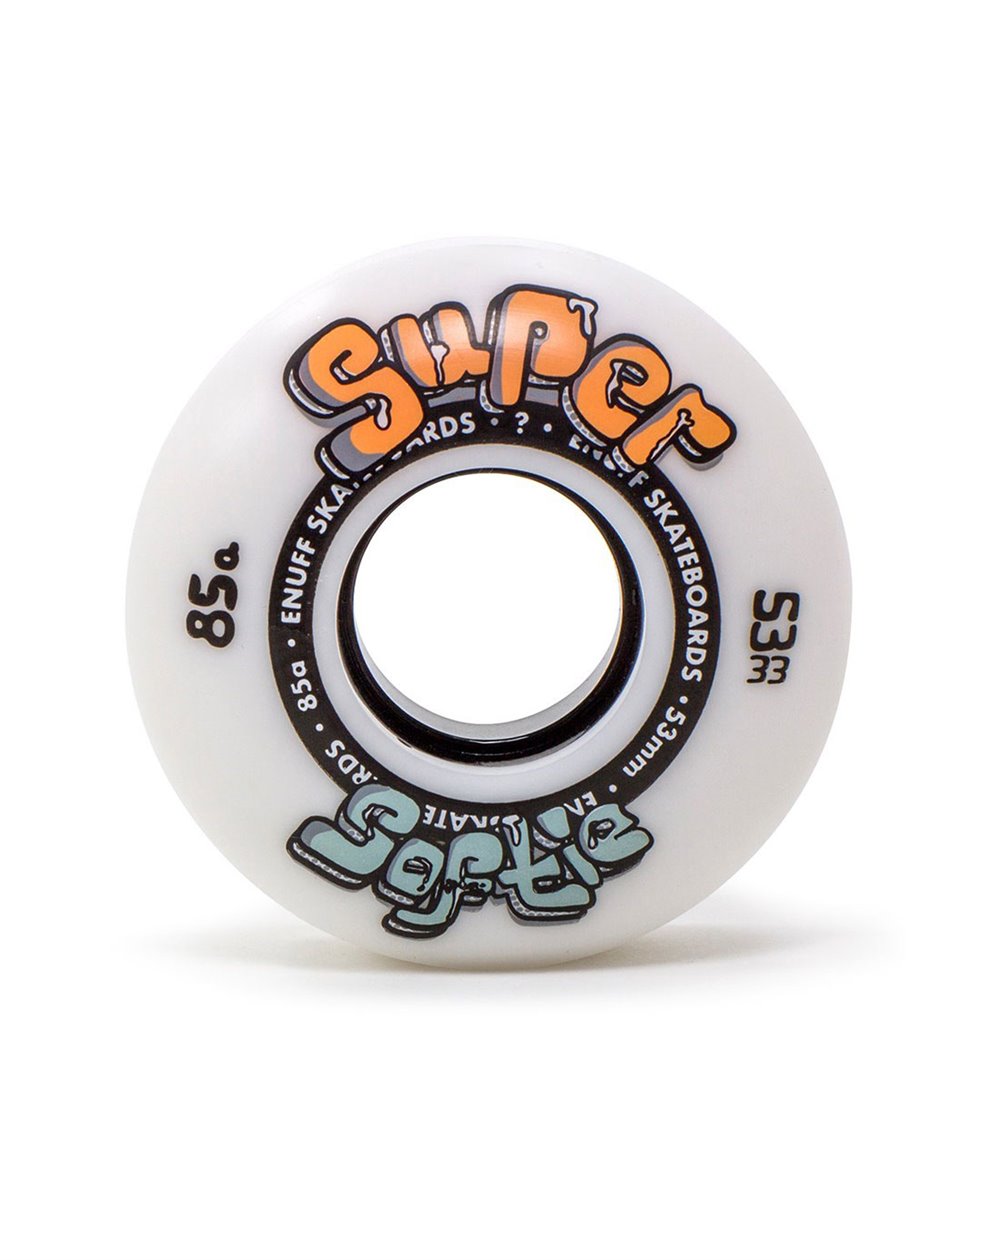 Enuff Super Softie 53mm 85A Skateboard Wheels White pack of 4